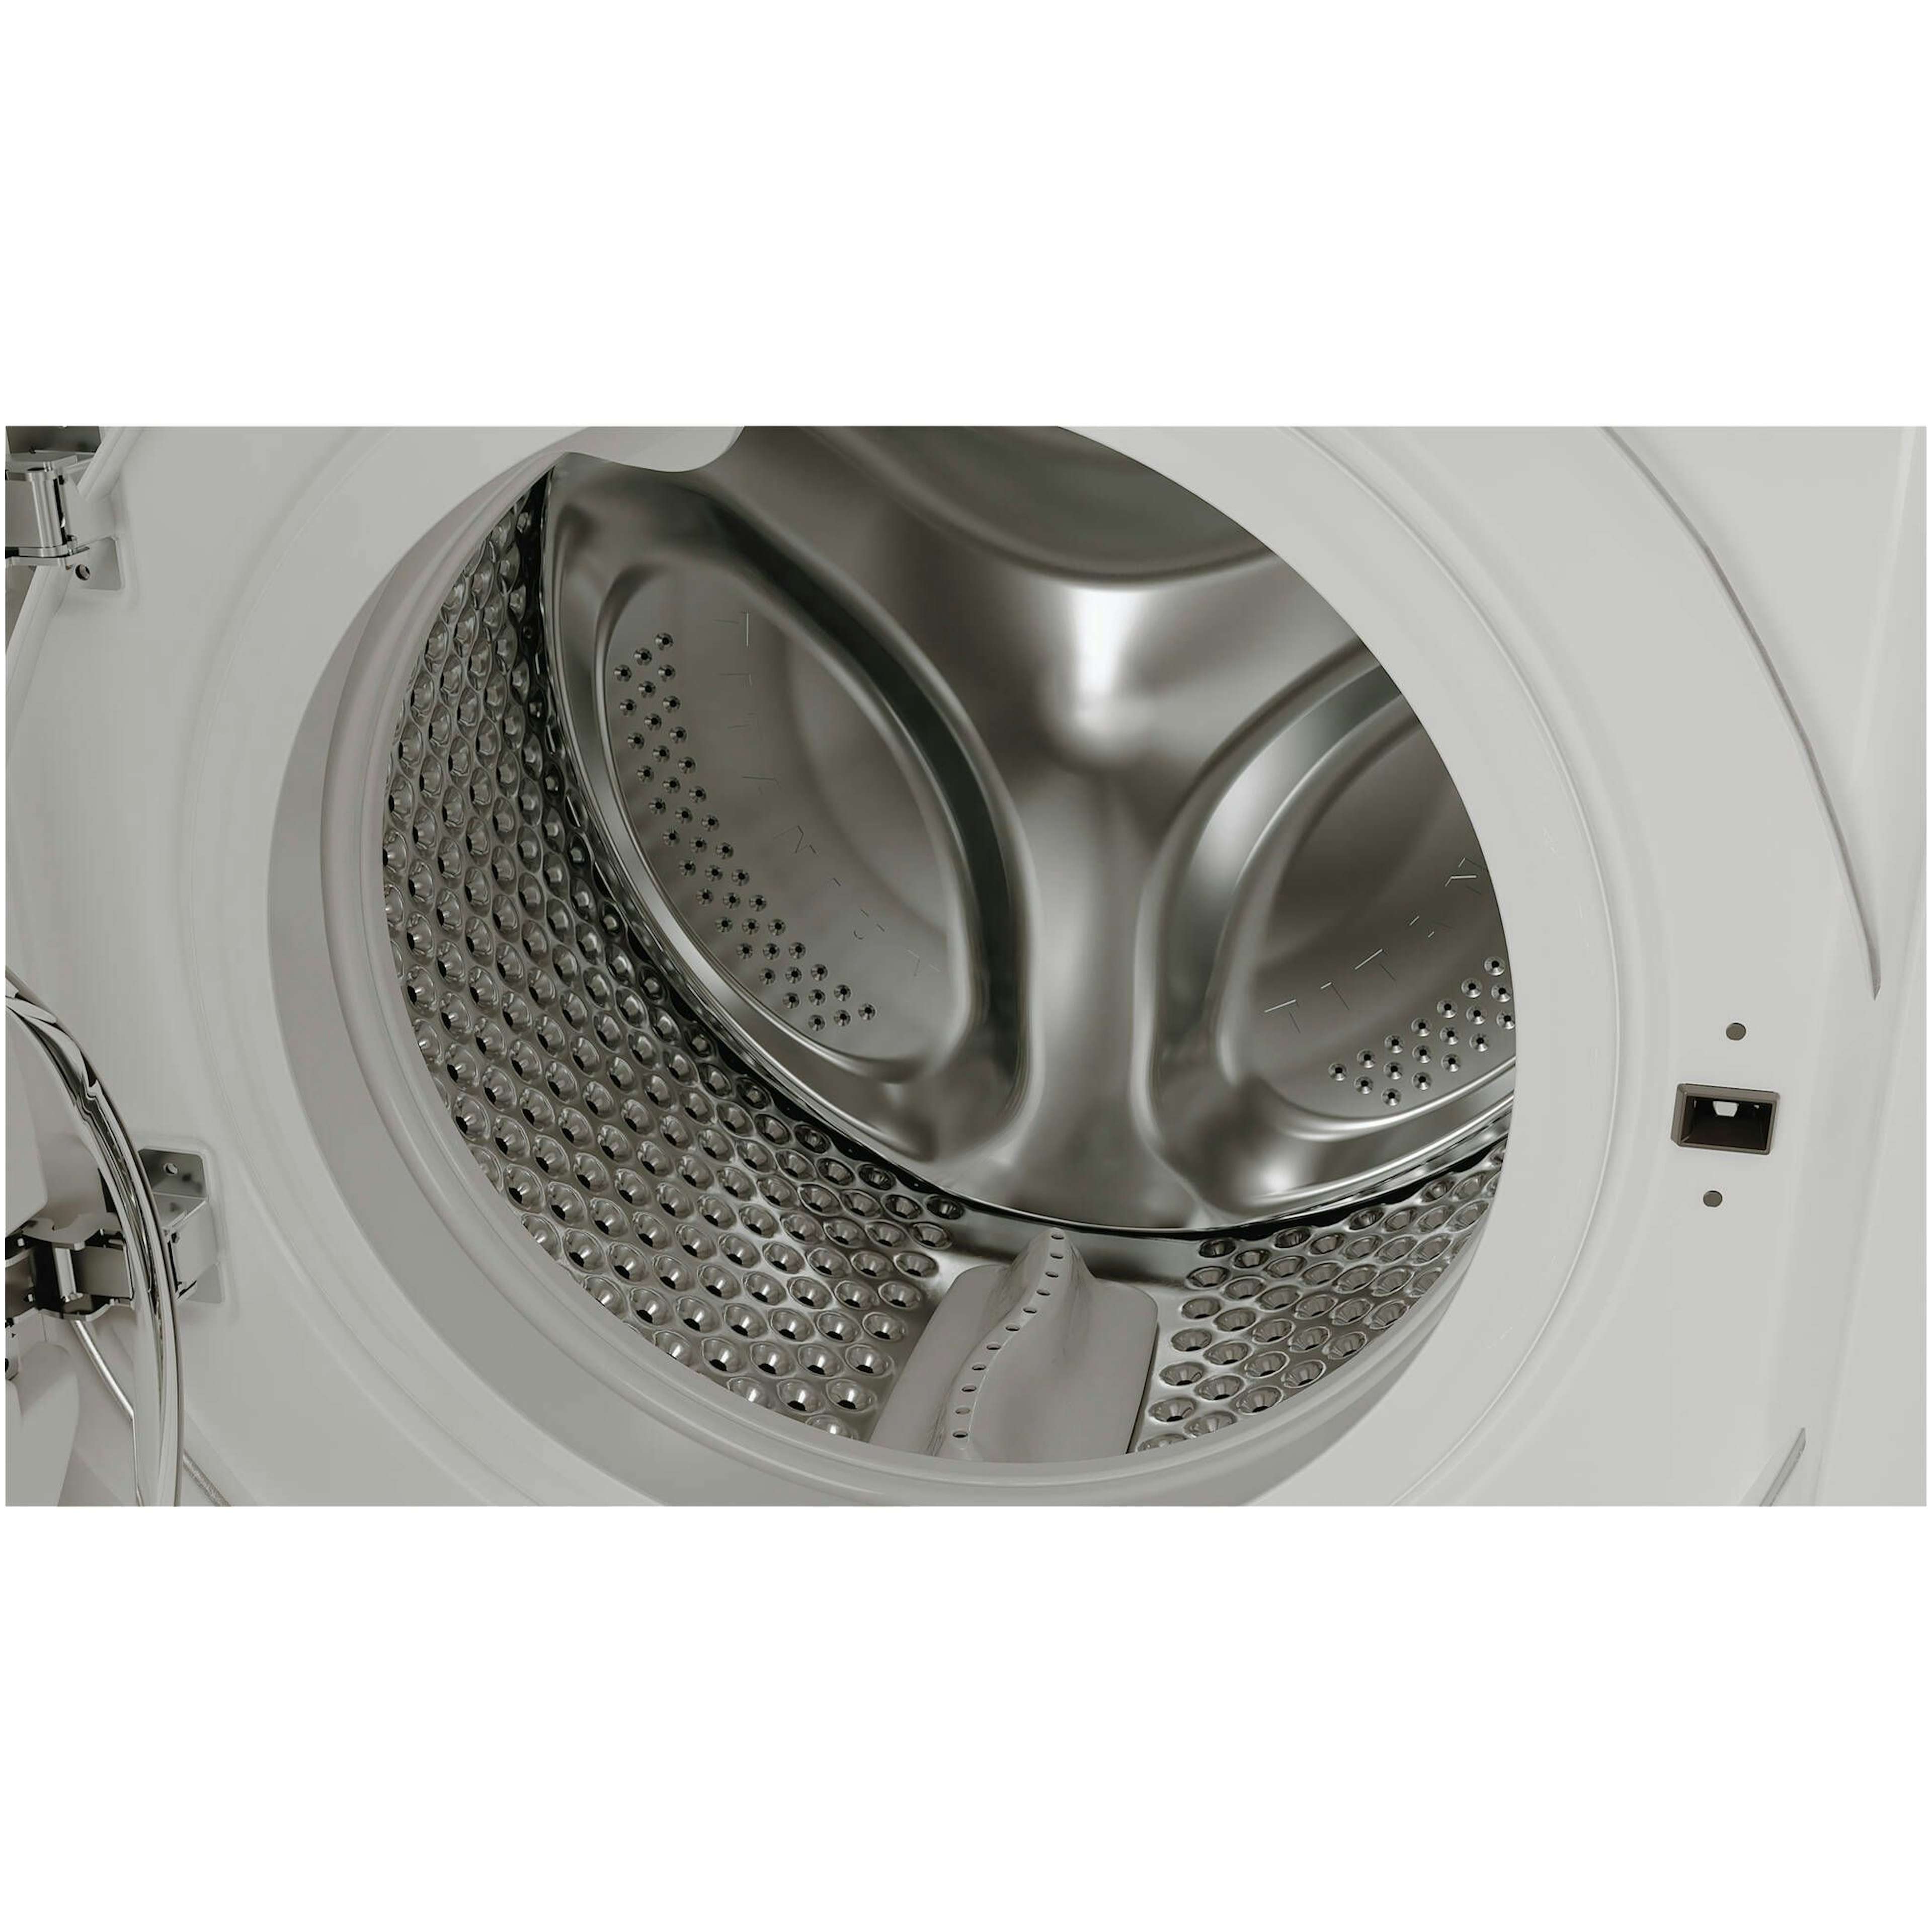 Whirlpool wasmachine inbouw BIWDWG961485EU afbeelding 4